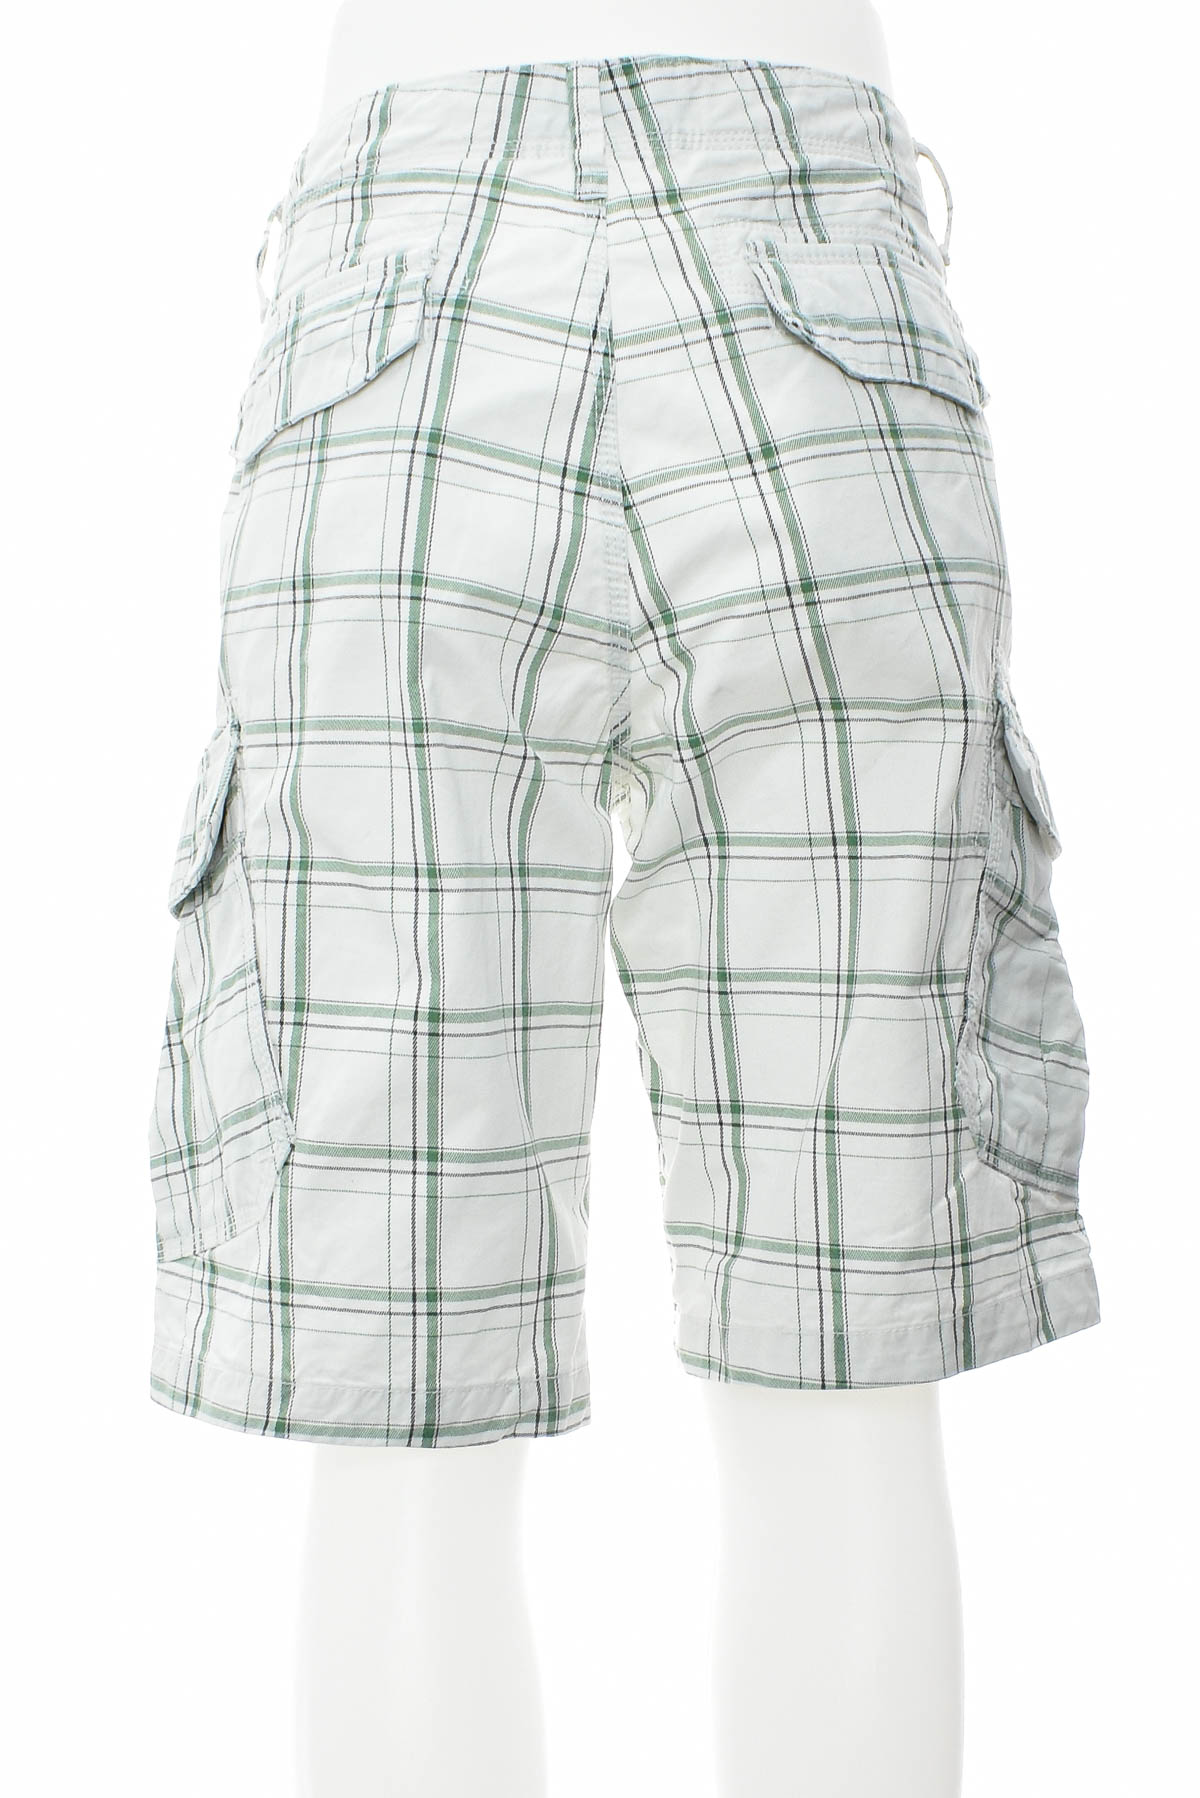 Angelo Litrico Men's Jeans Pants Chino Slim Leg W32 L30 Green | eBay